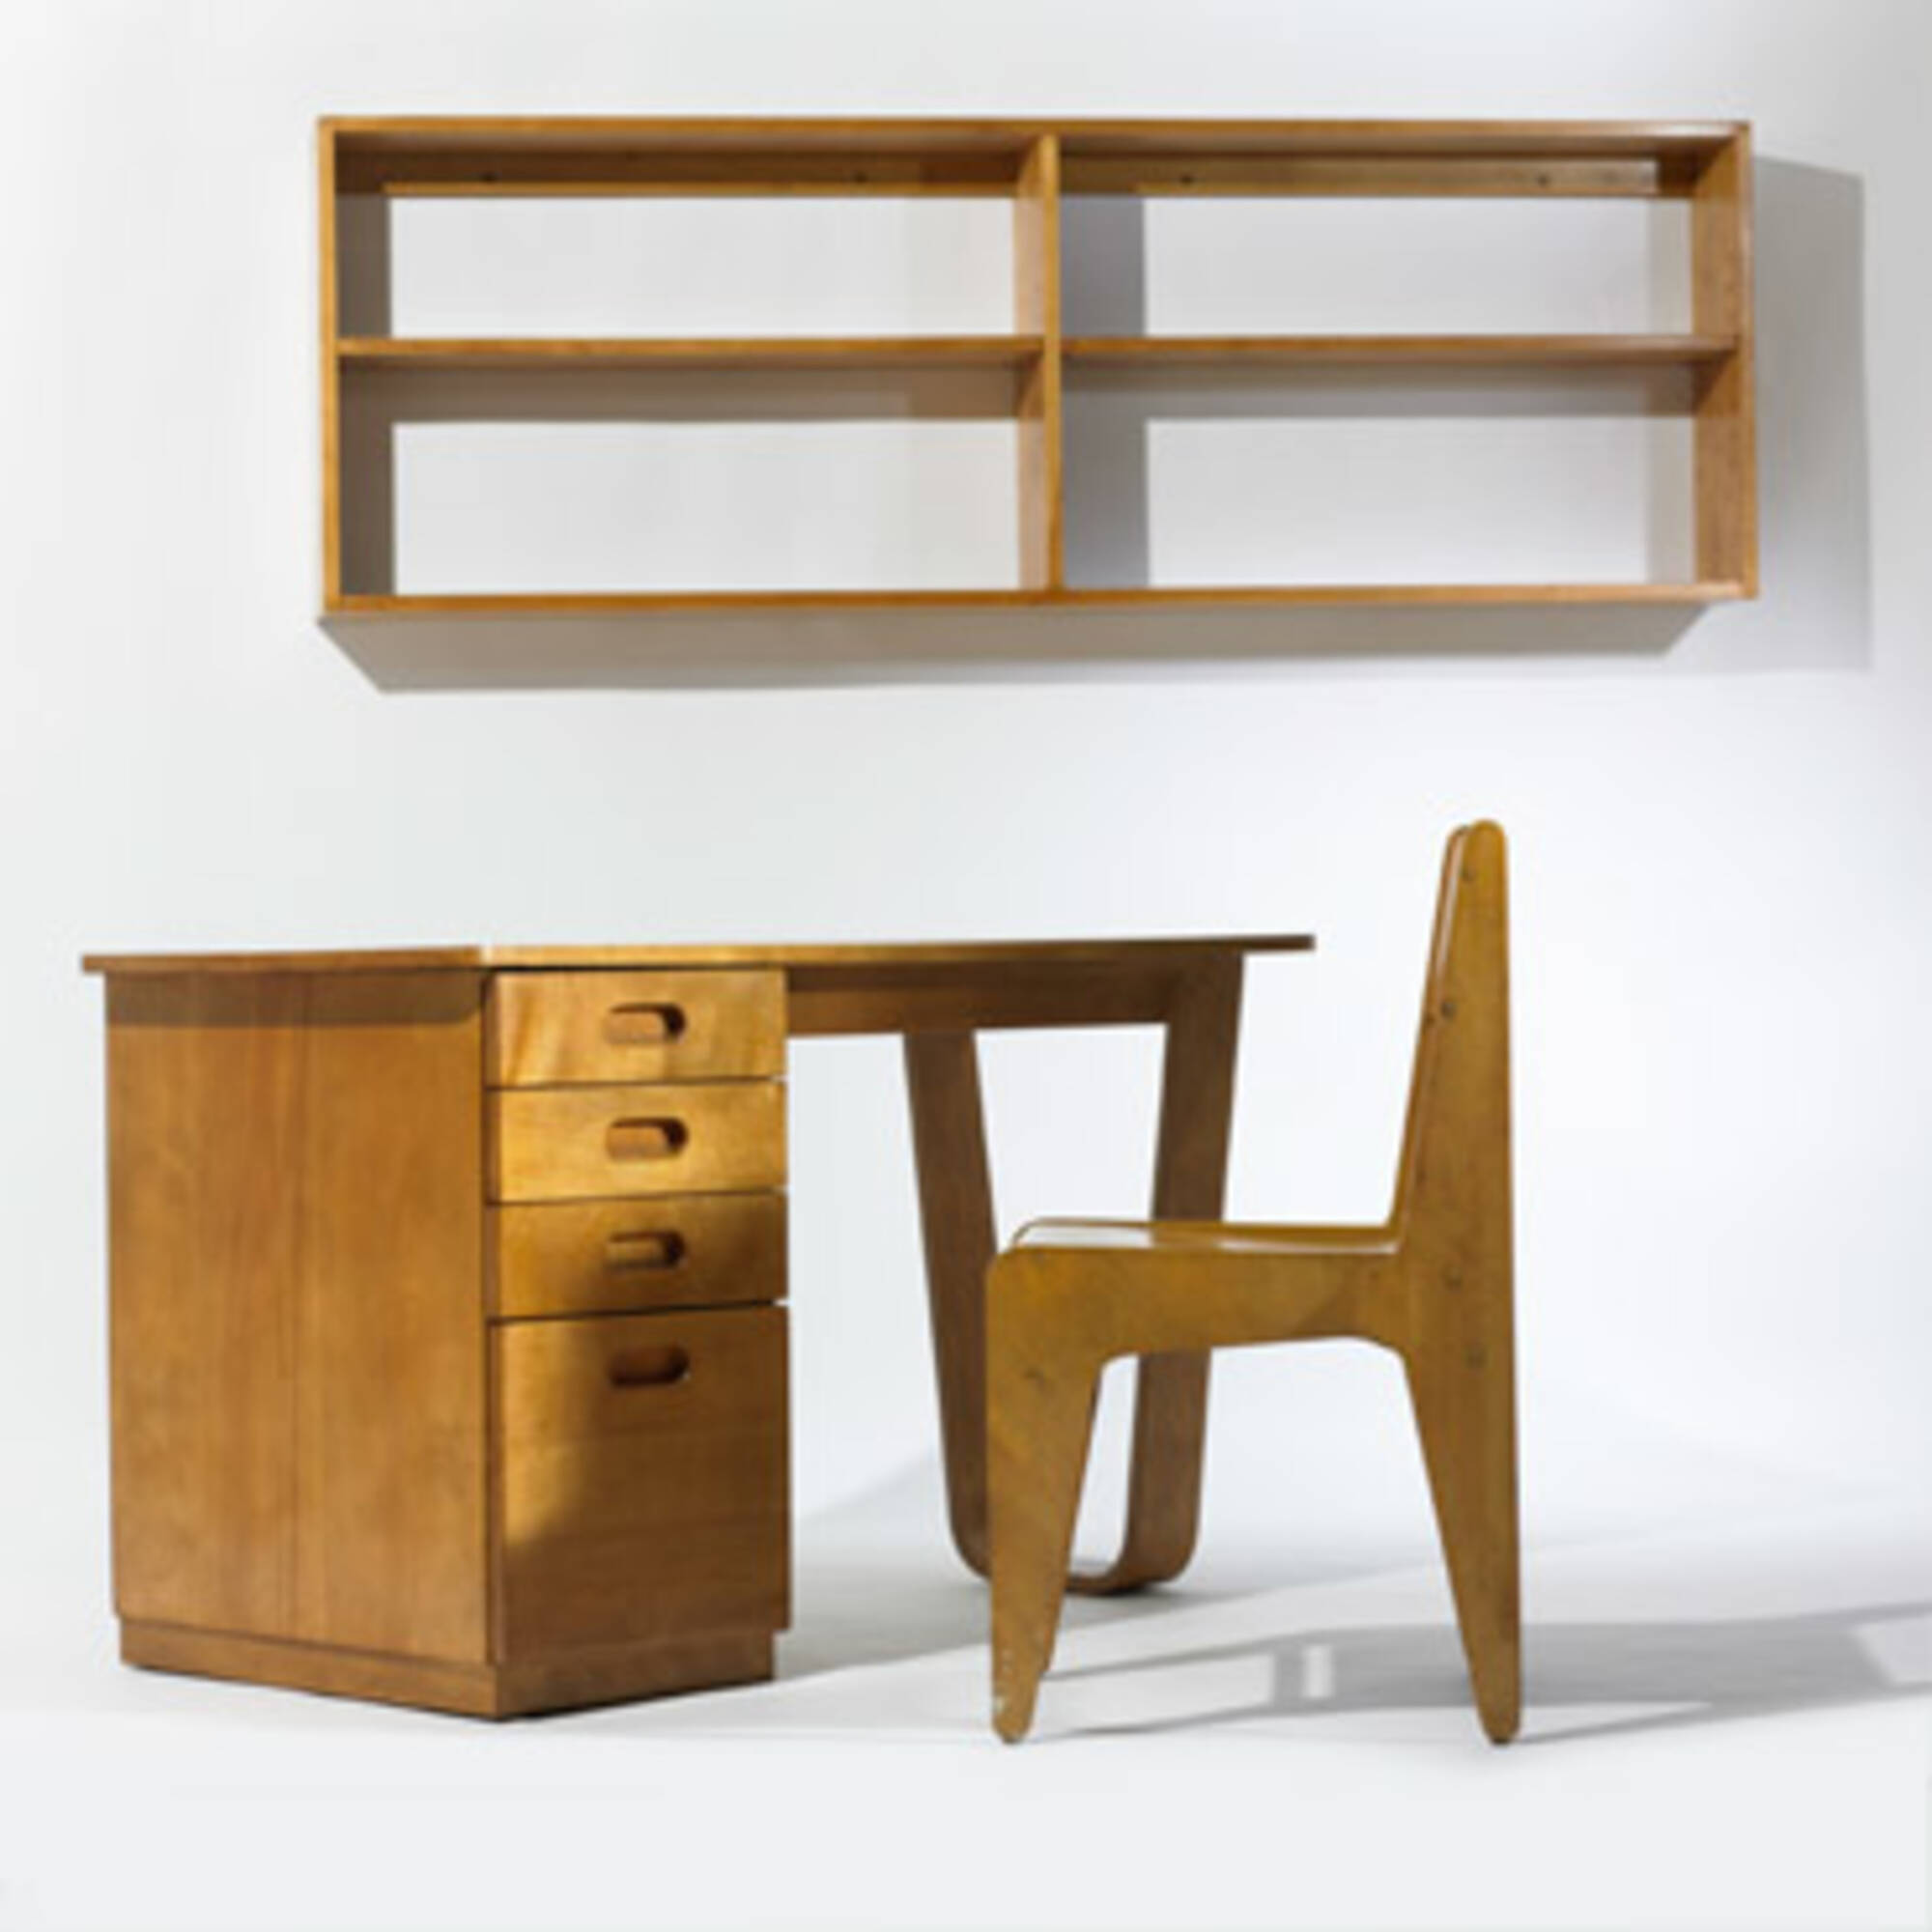 208 Marcel Breuer Furniture Set For Bryn Mawr College